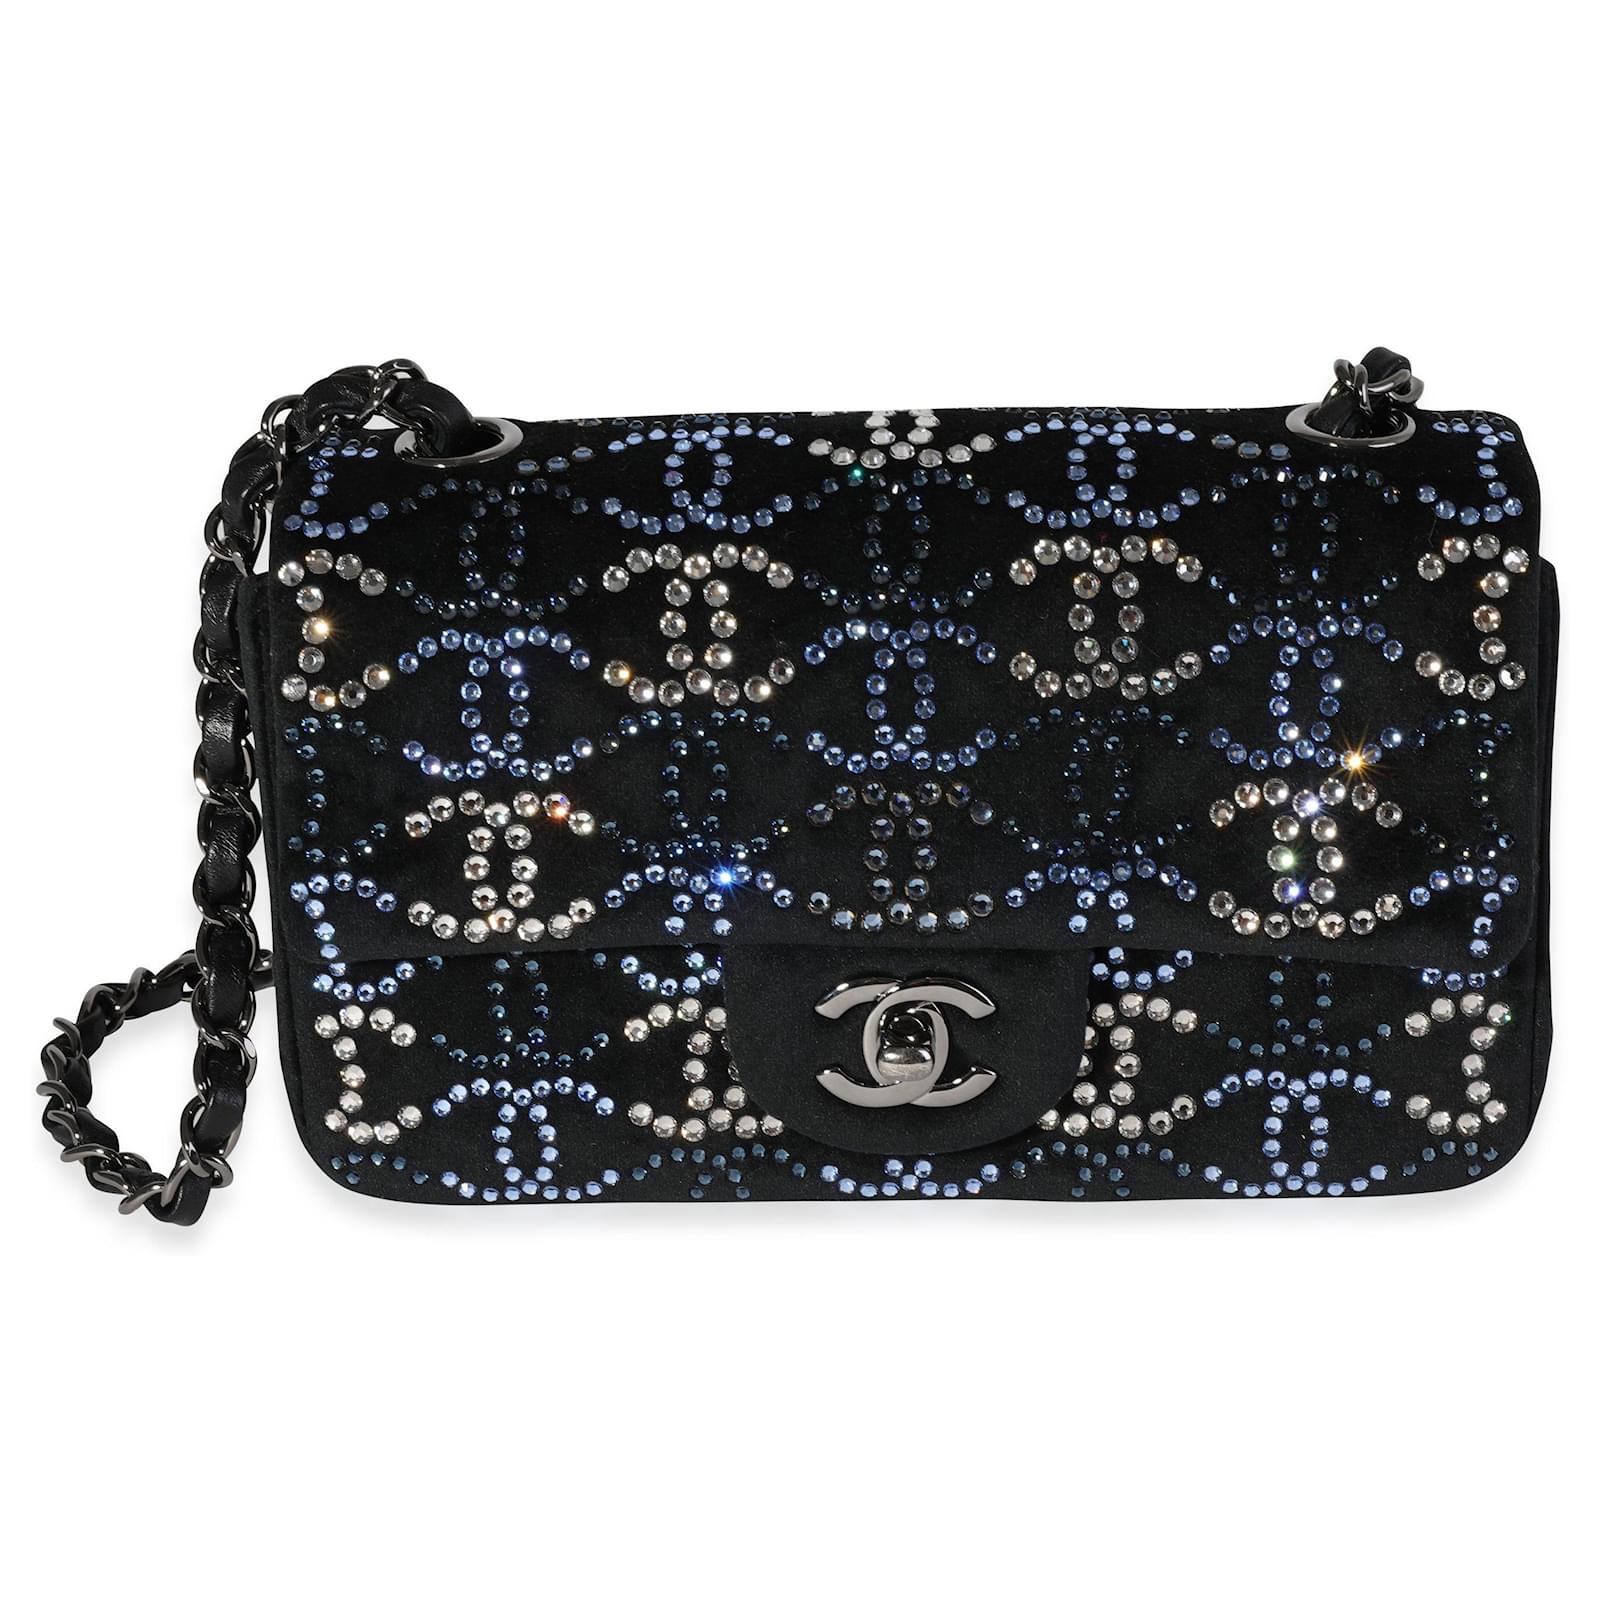 Chanel Black Velvet & Crystal Cc Mini Rectangular Flap Bag Leather